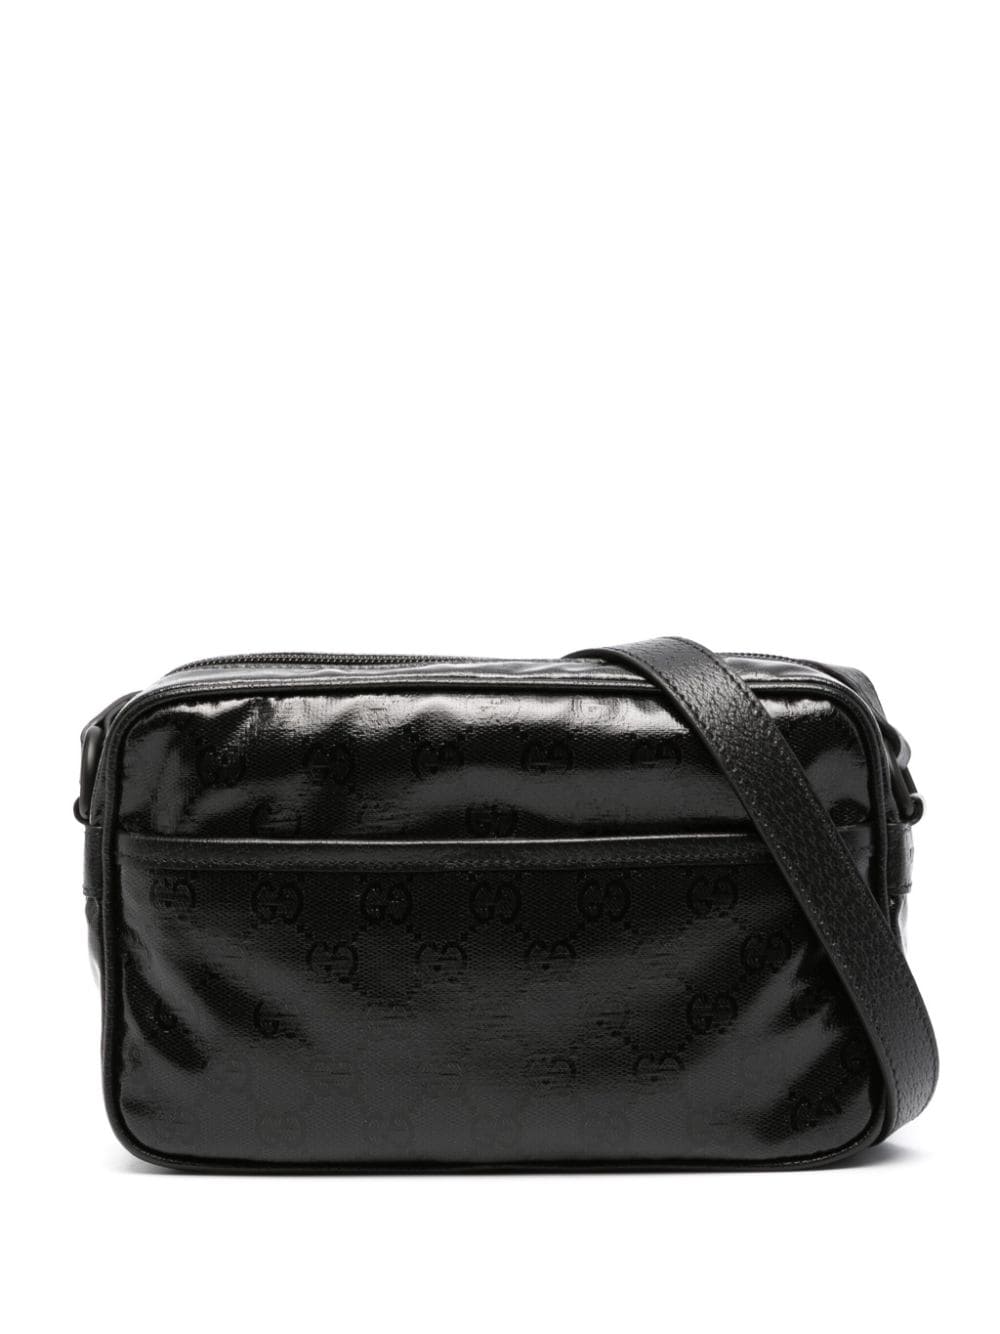 Gucci GG-debossed Leather Backpack in Black for Men